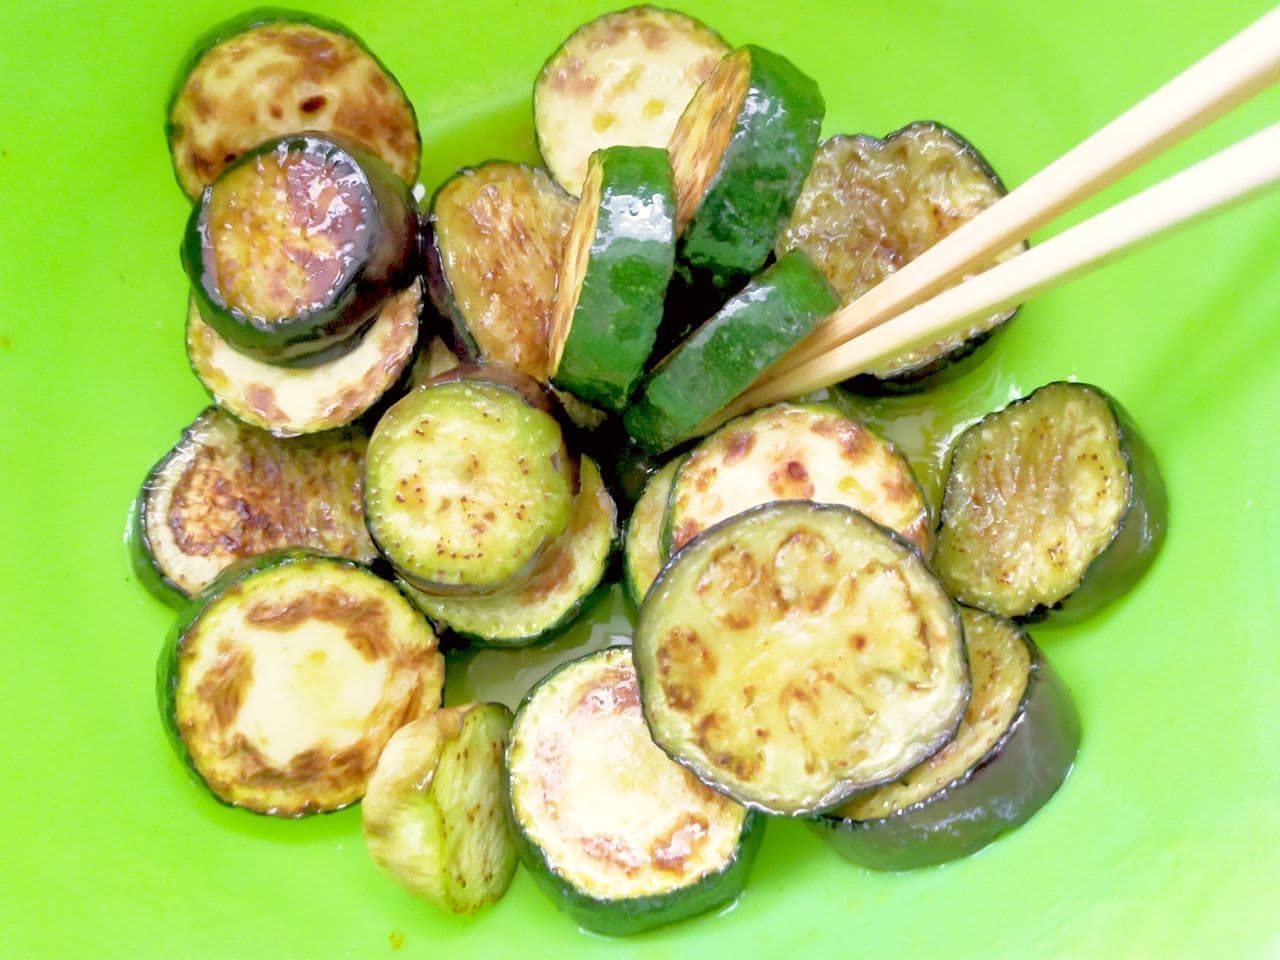 "Marinated eggplant and zucchini" recipe